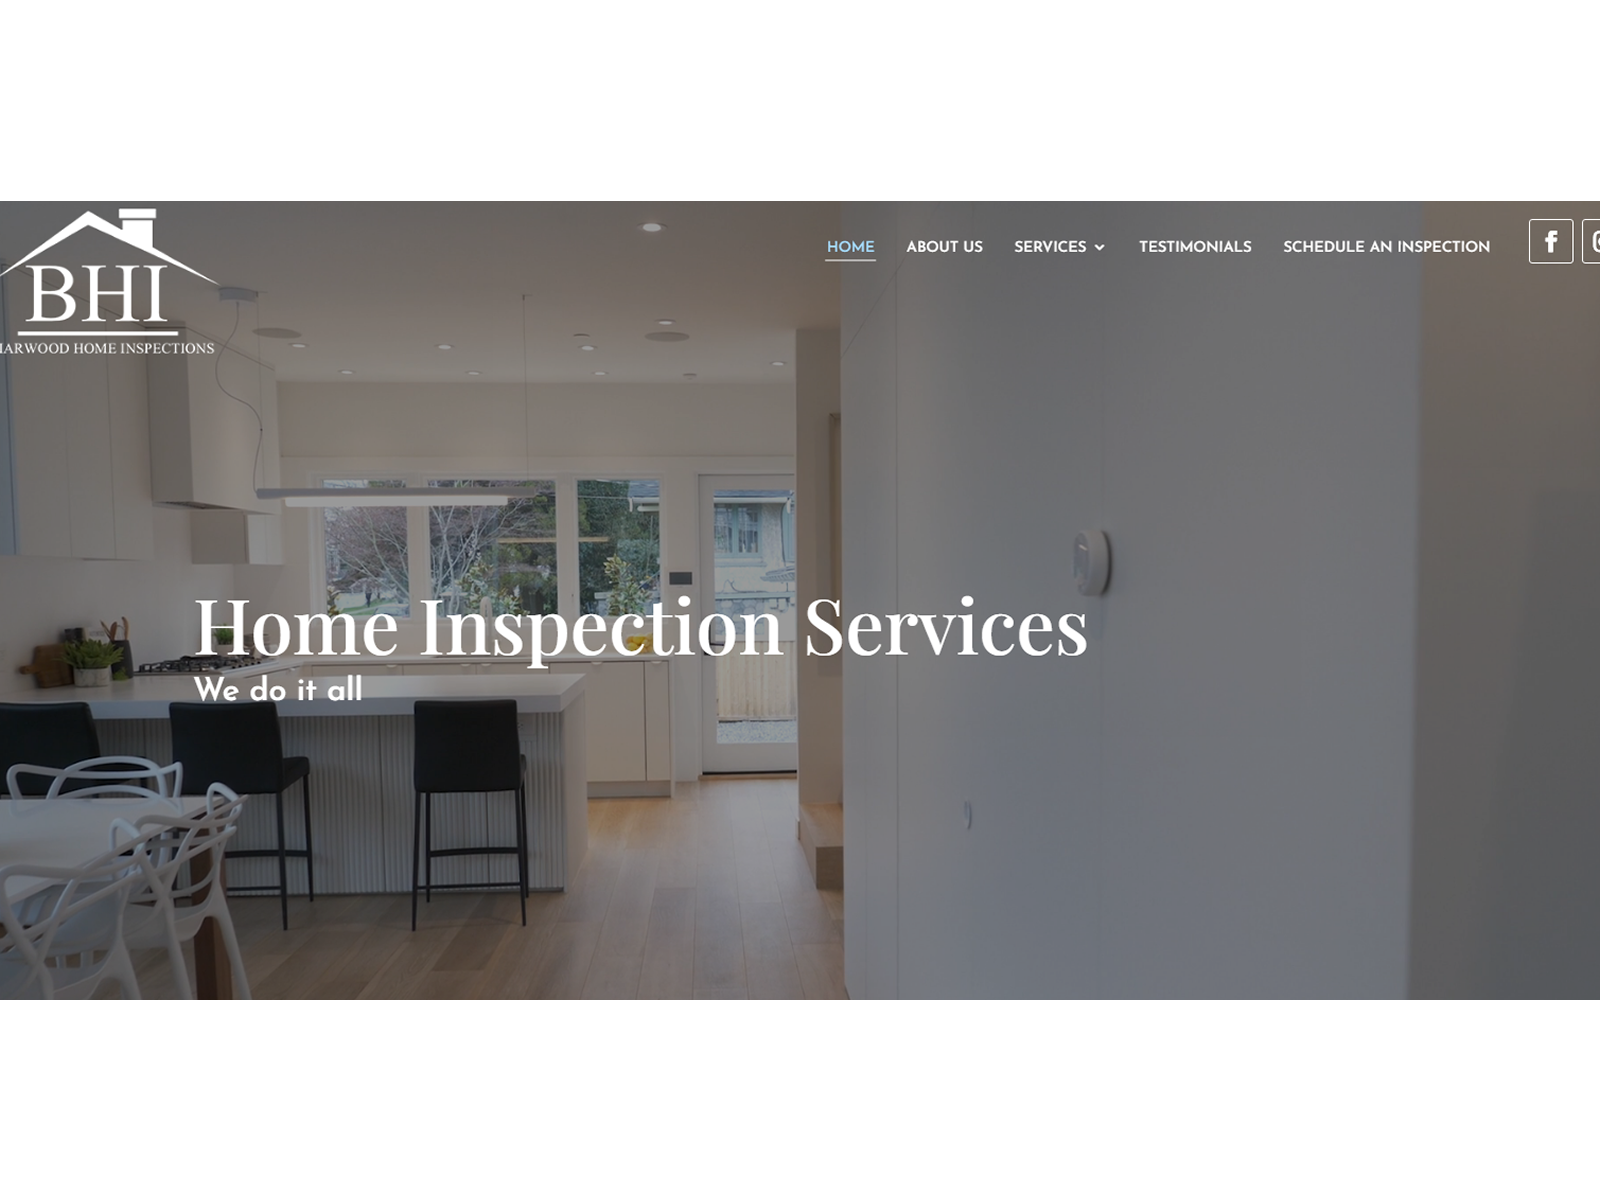 Briarwood Home Inspections, LLC